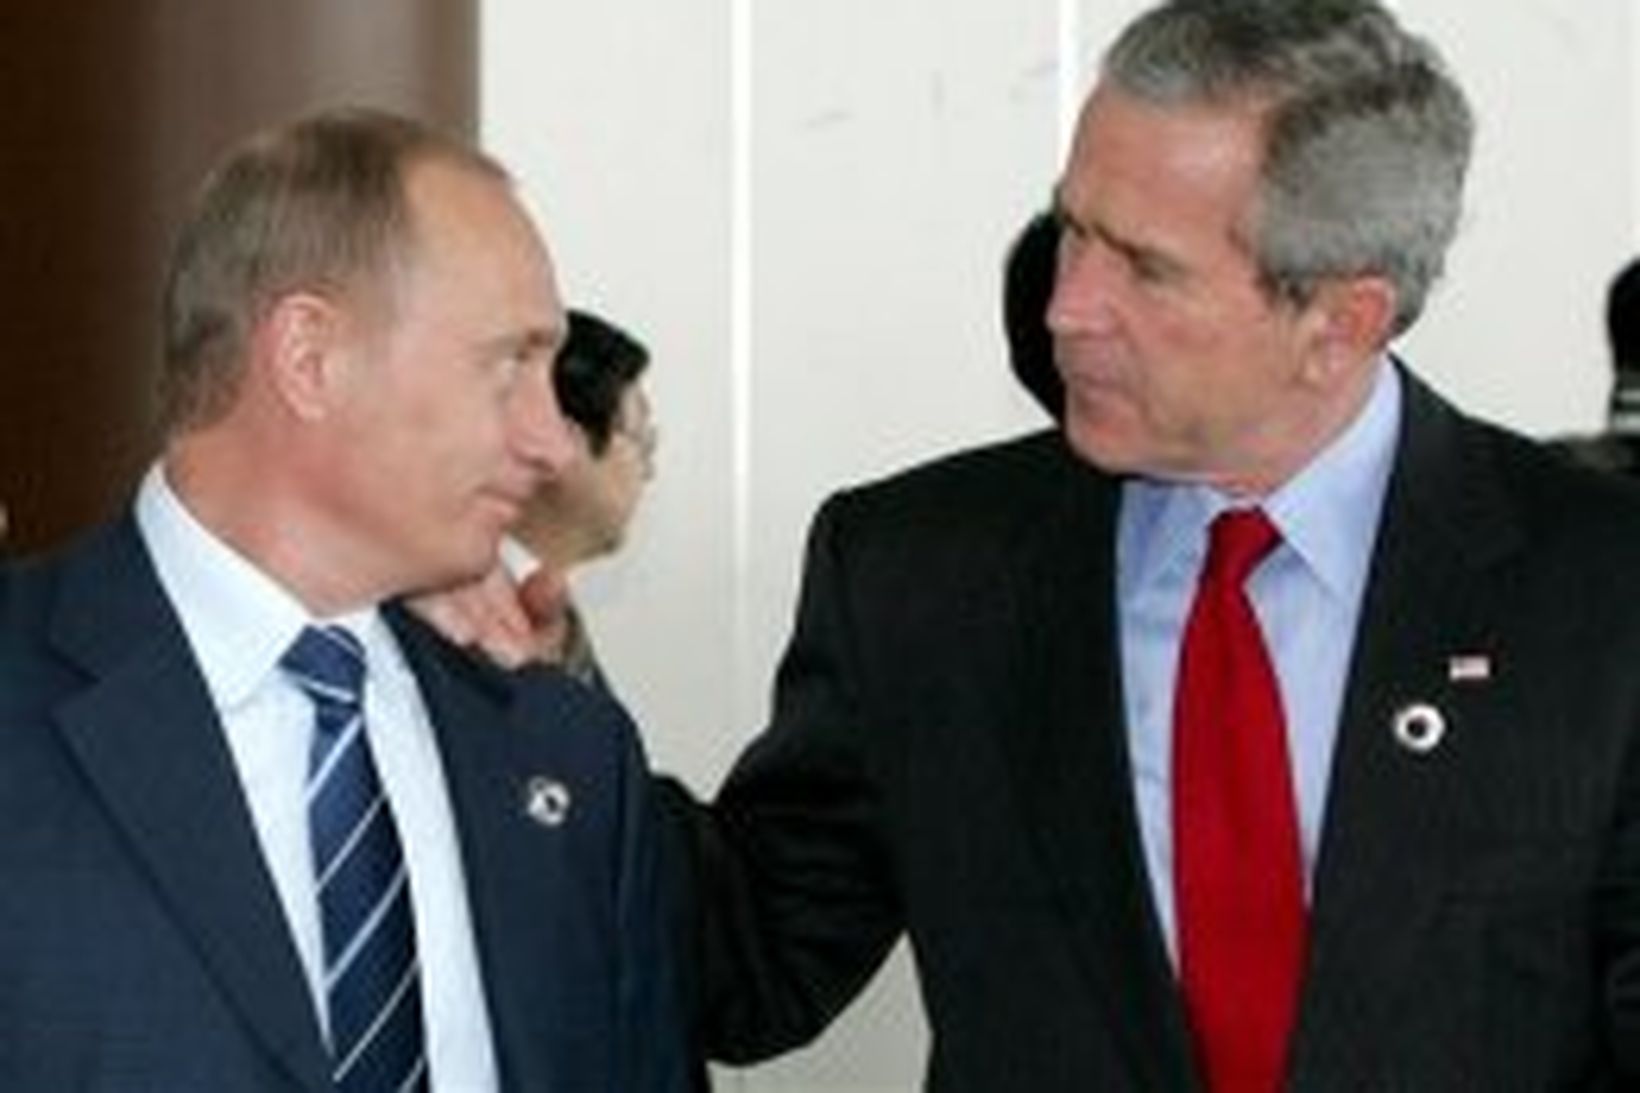 Vlaímír Pútín, forseti Rússlands, og George W. Bush, forseti Bandaríkjanna, …